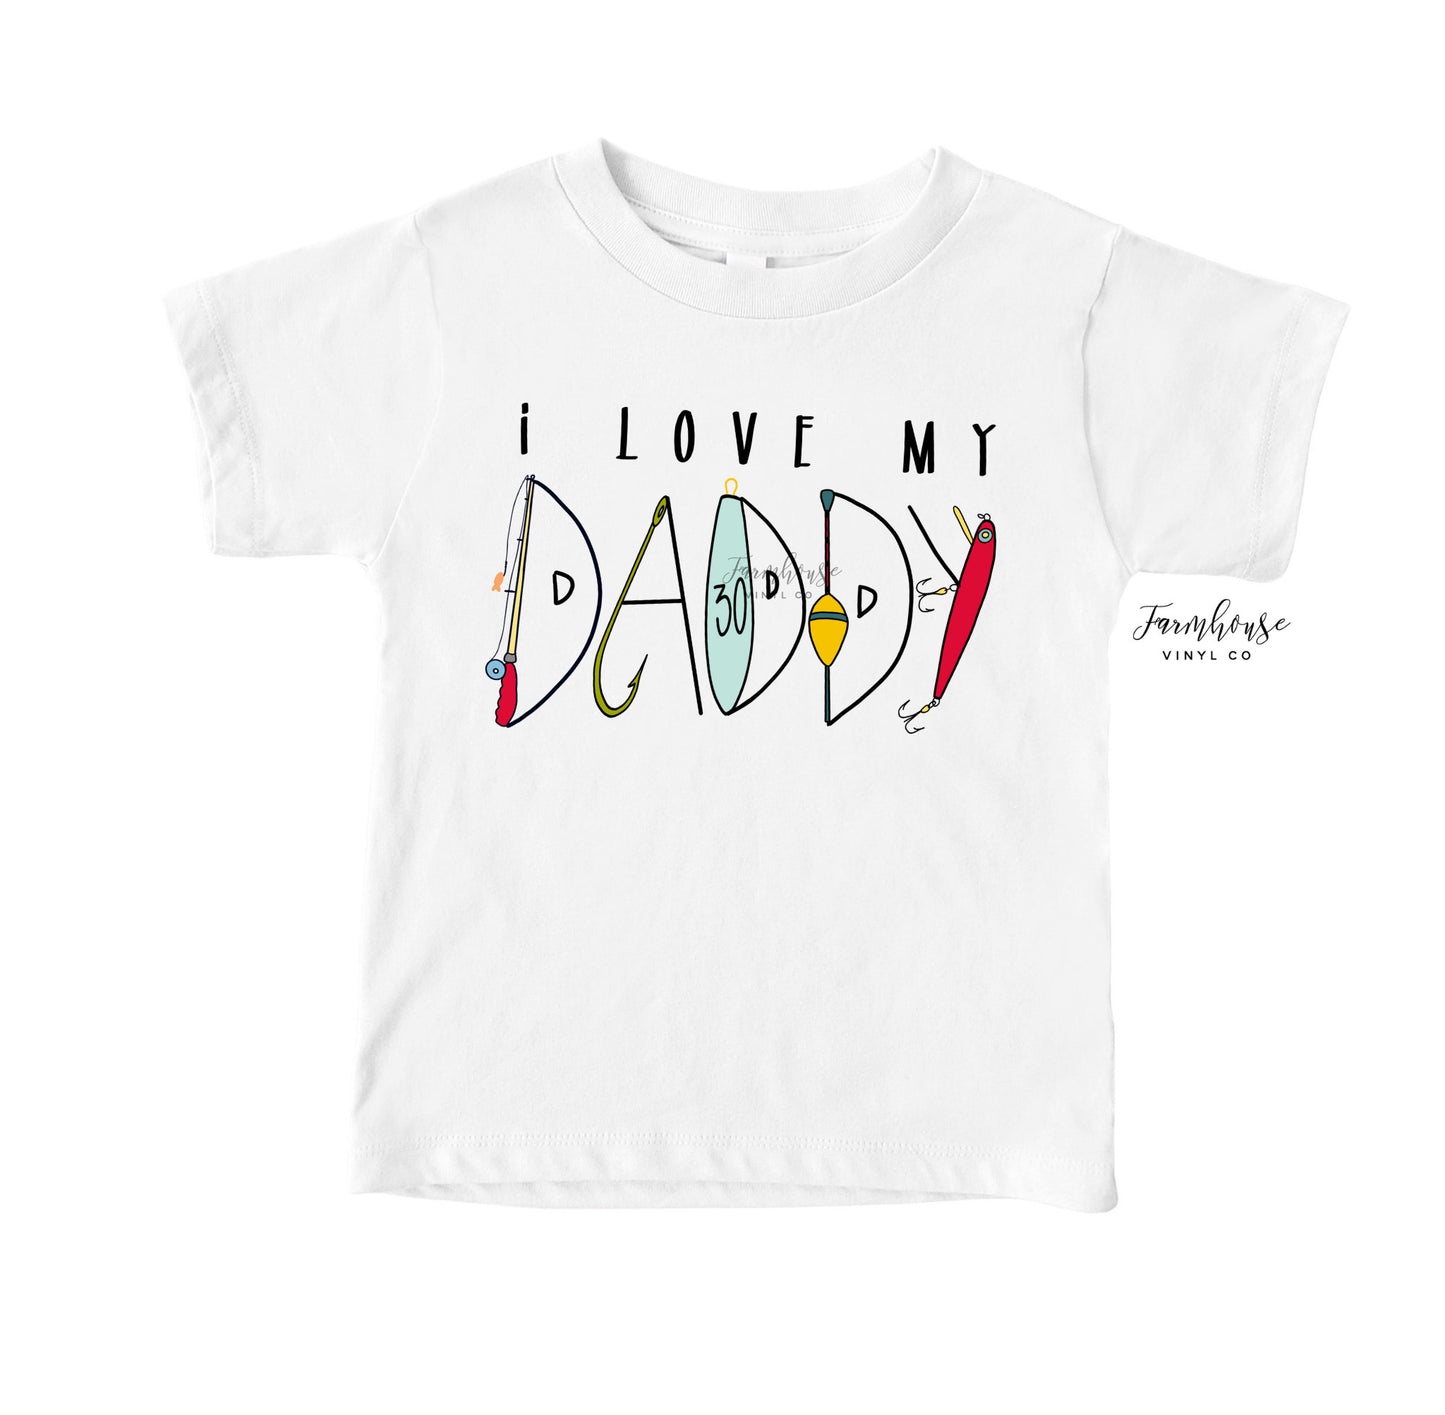 I Love My Daddy Shirt / Fishing Kids Shirt / Fathers Day Shirt Gift / Fishing Lures / Kids Fathers Day Shirt - Farmhouse Vinyl Co